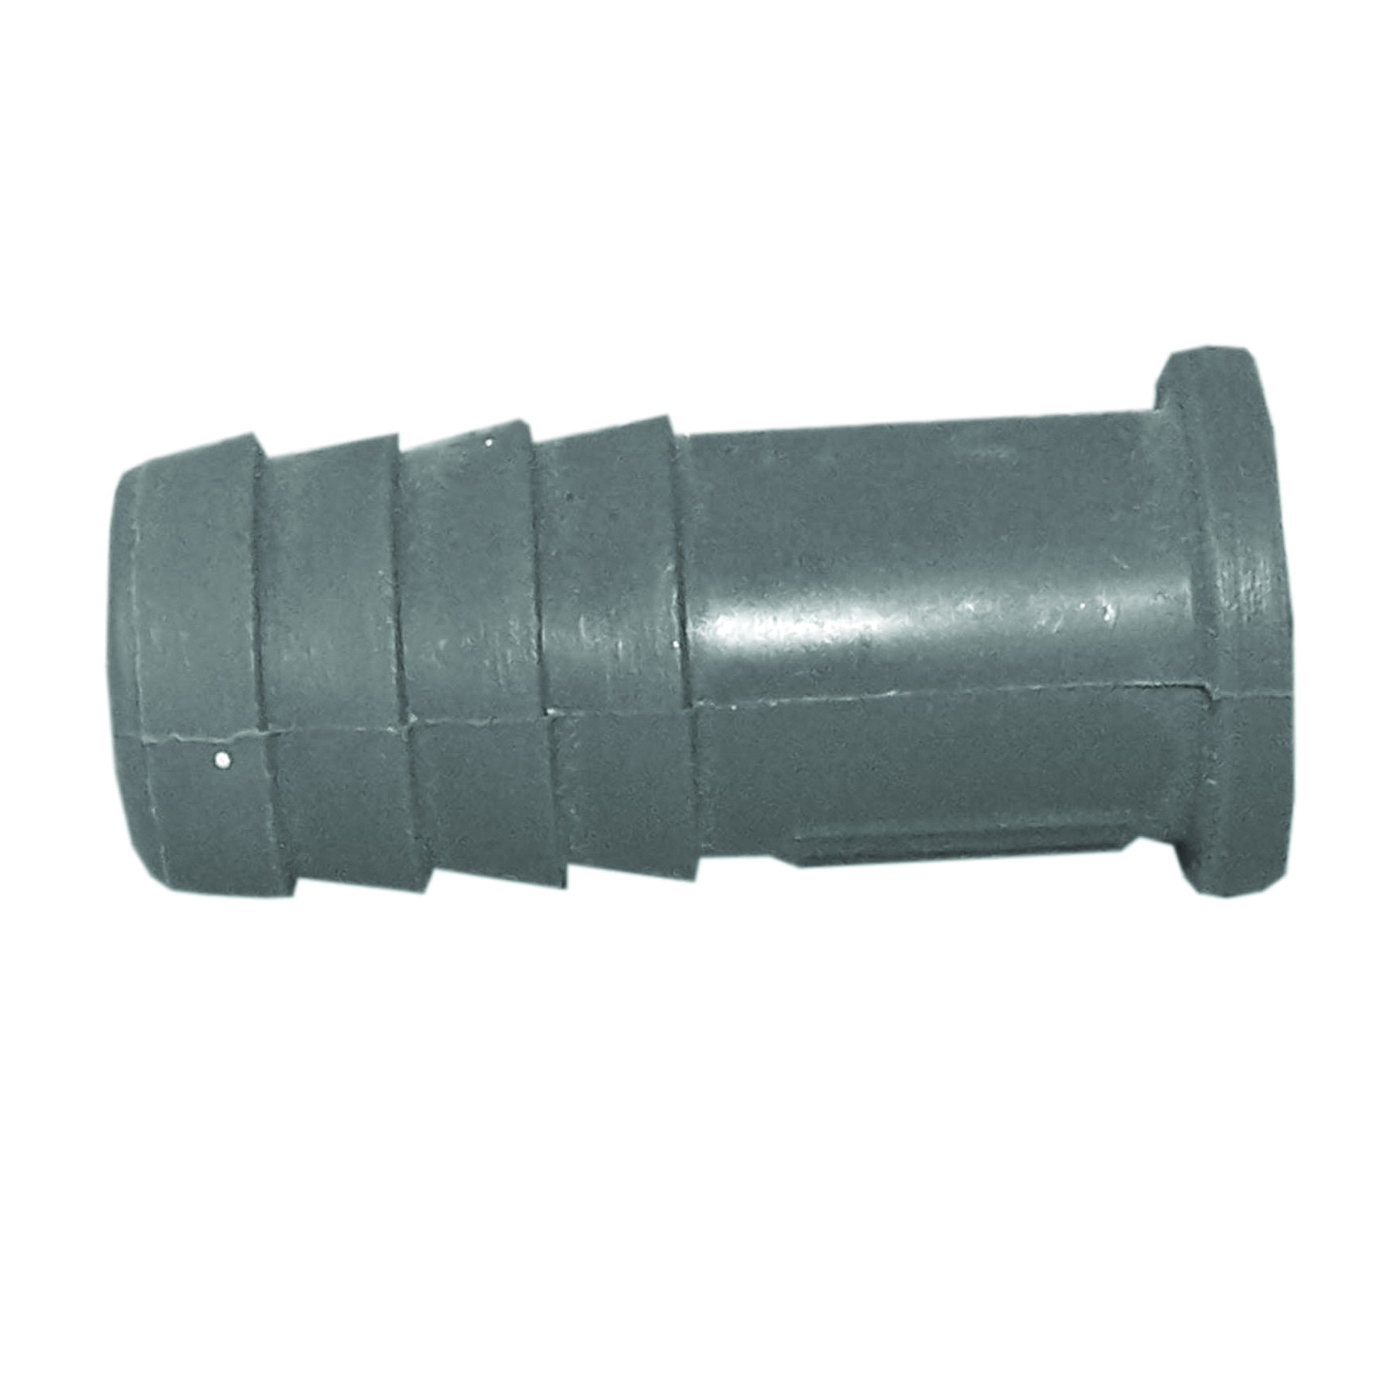 351825 Plug, 1/2 in, Insert, Polypropylene/PVC